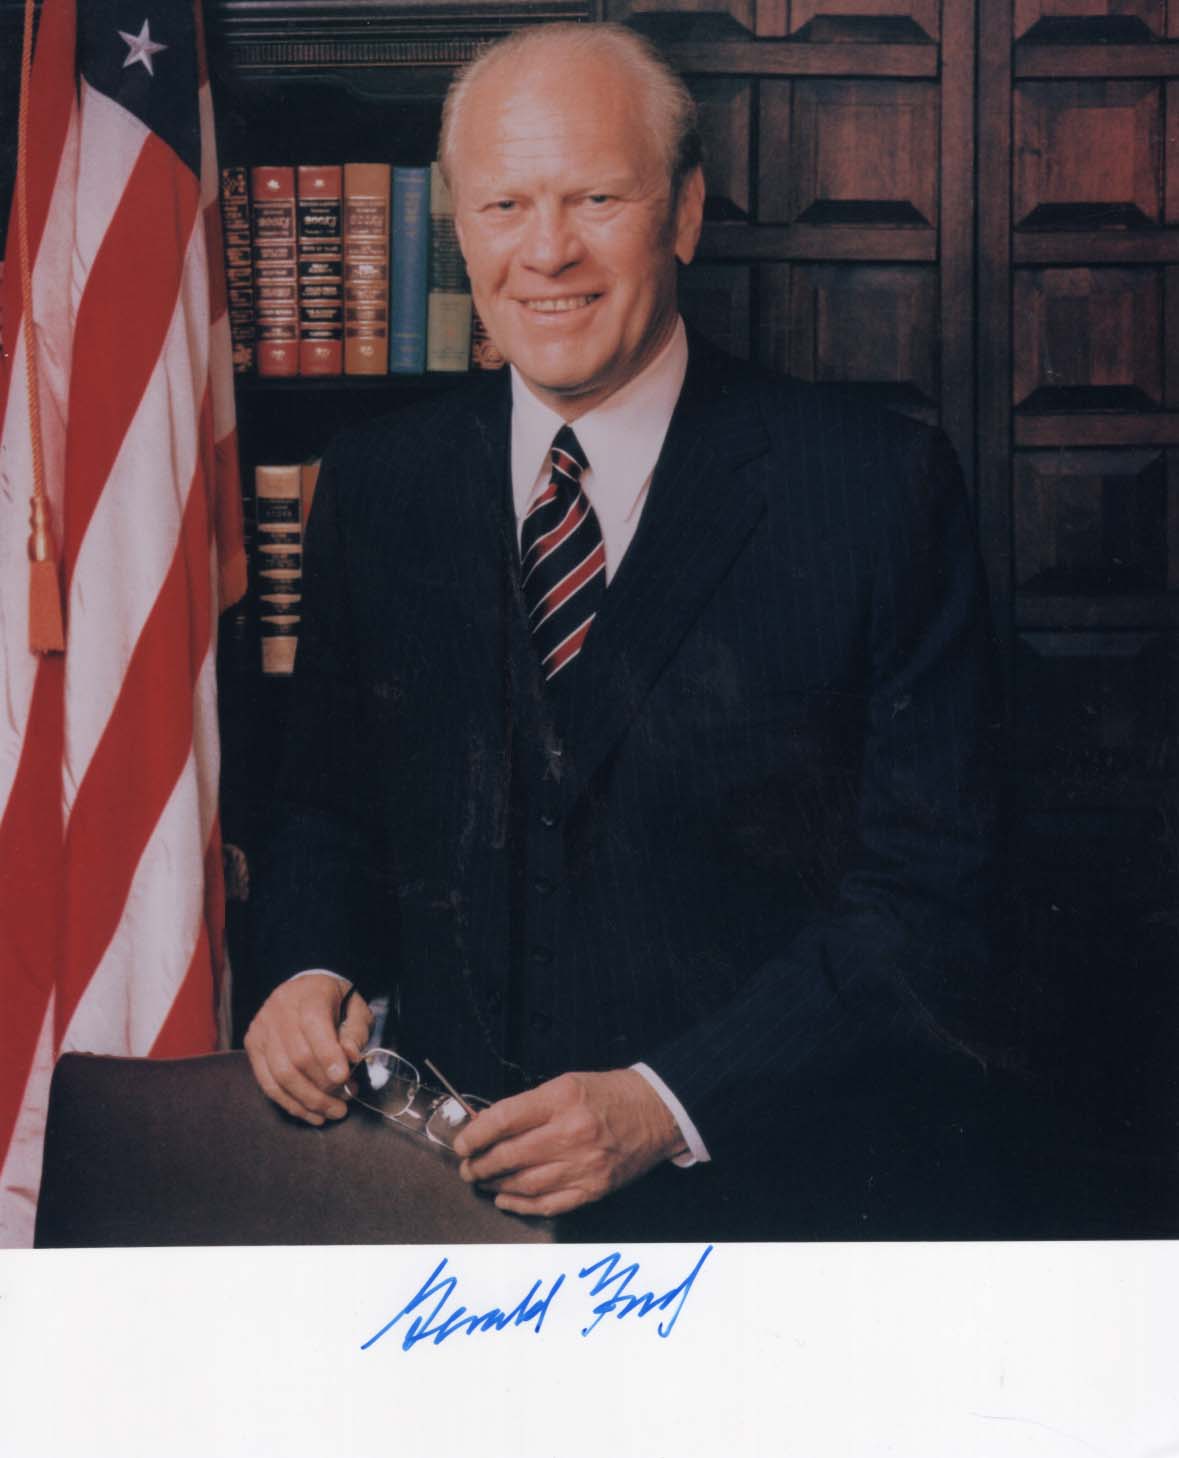 Gerald Ford Autograph Autogramm | ID 8321595211925